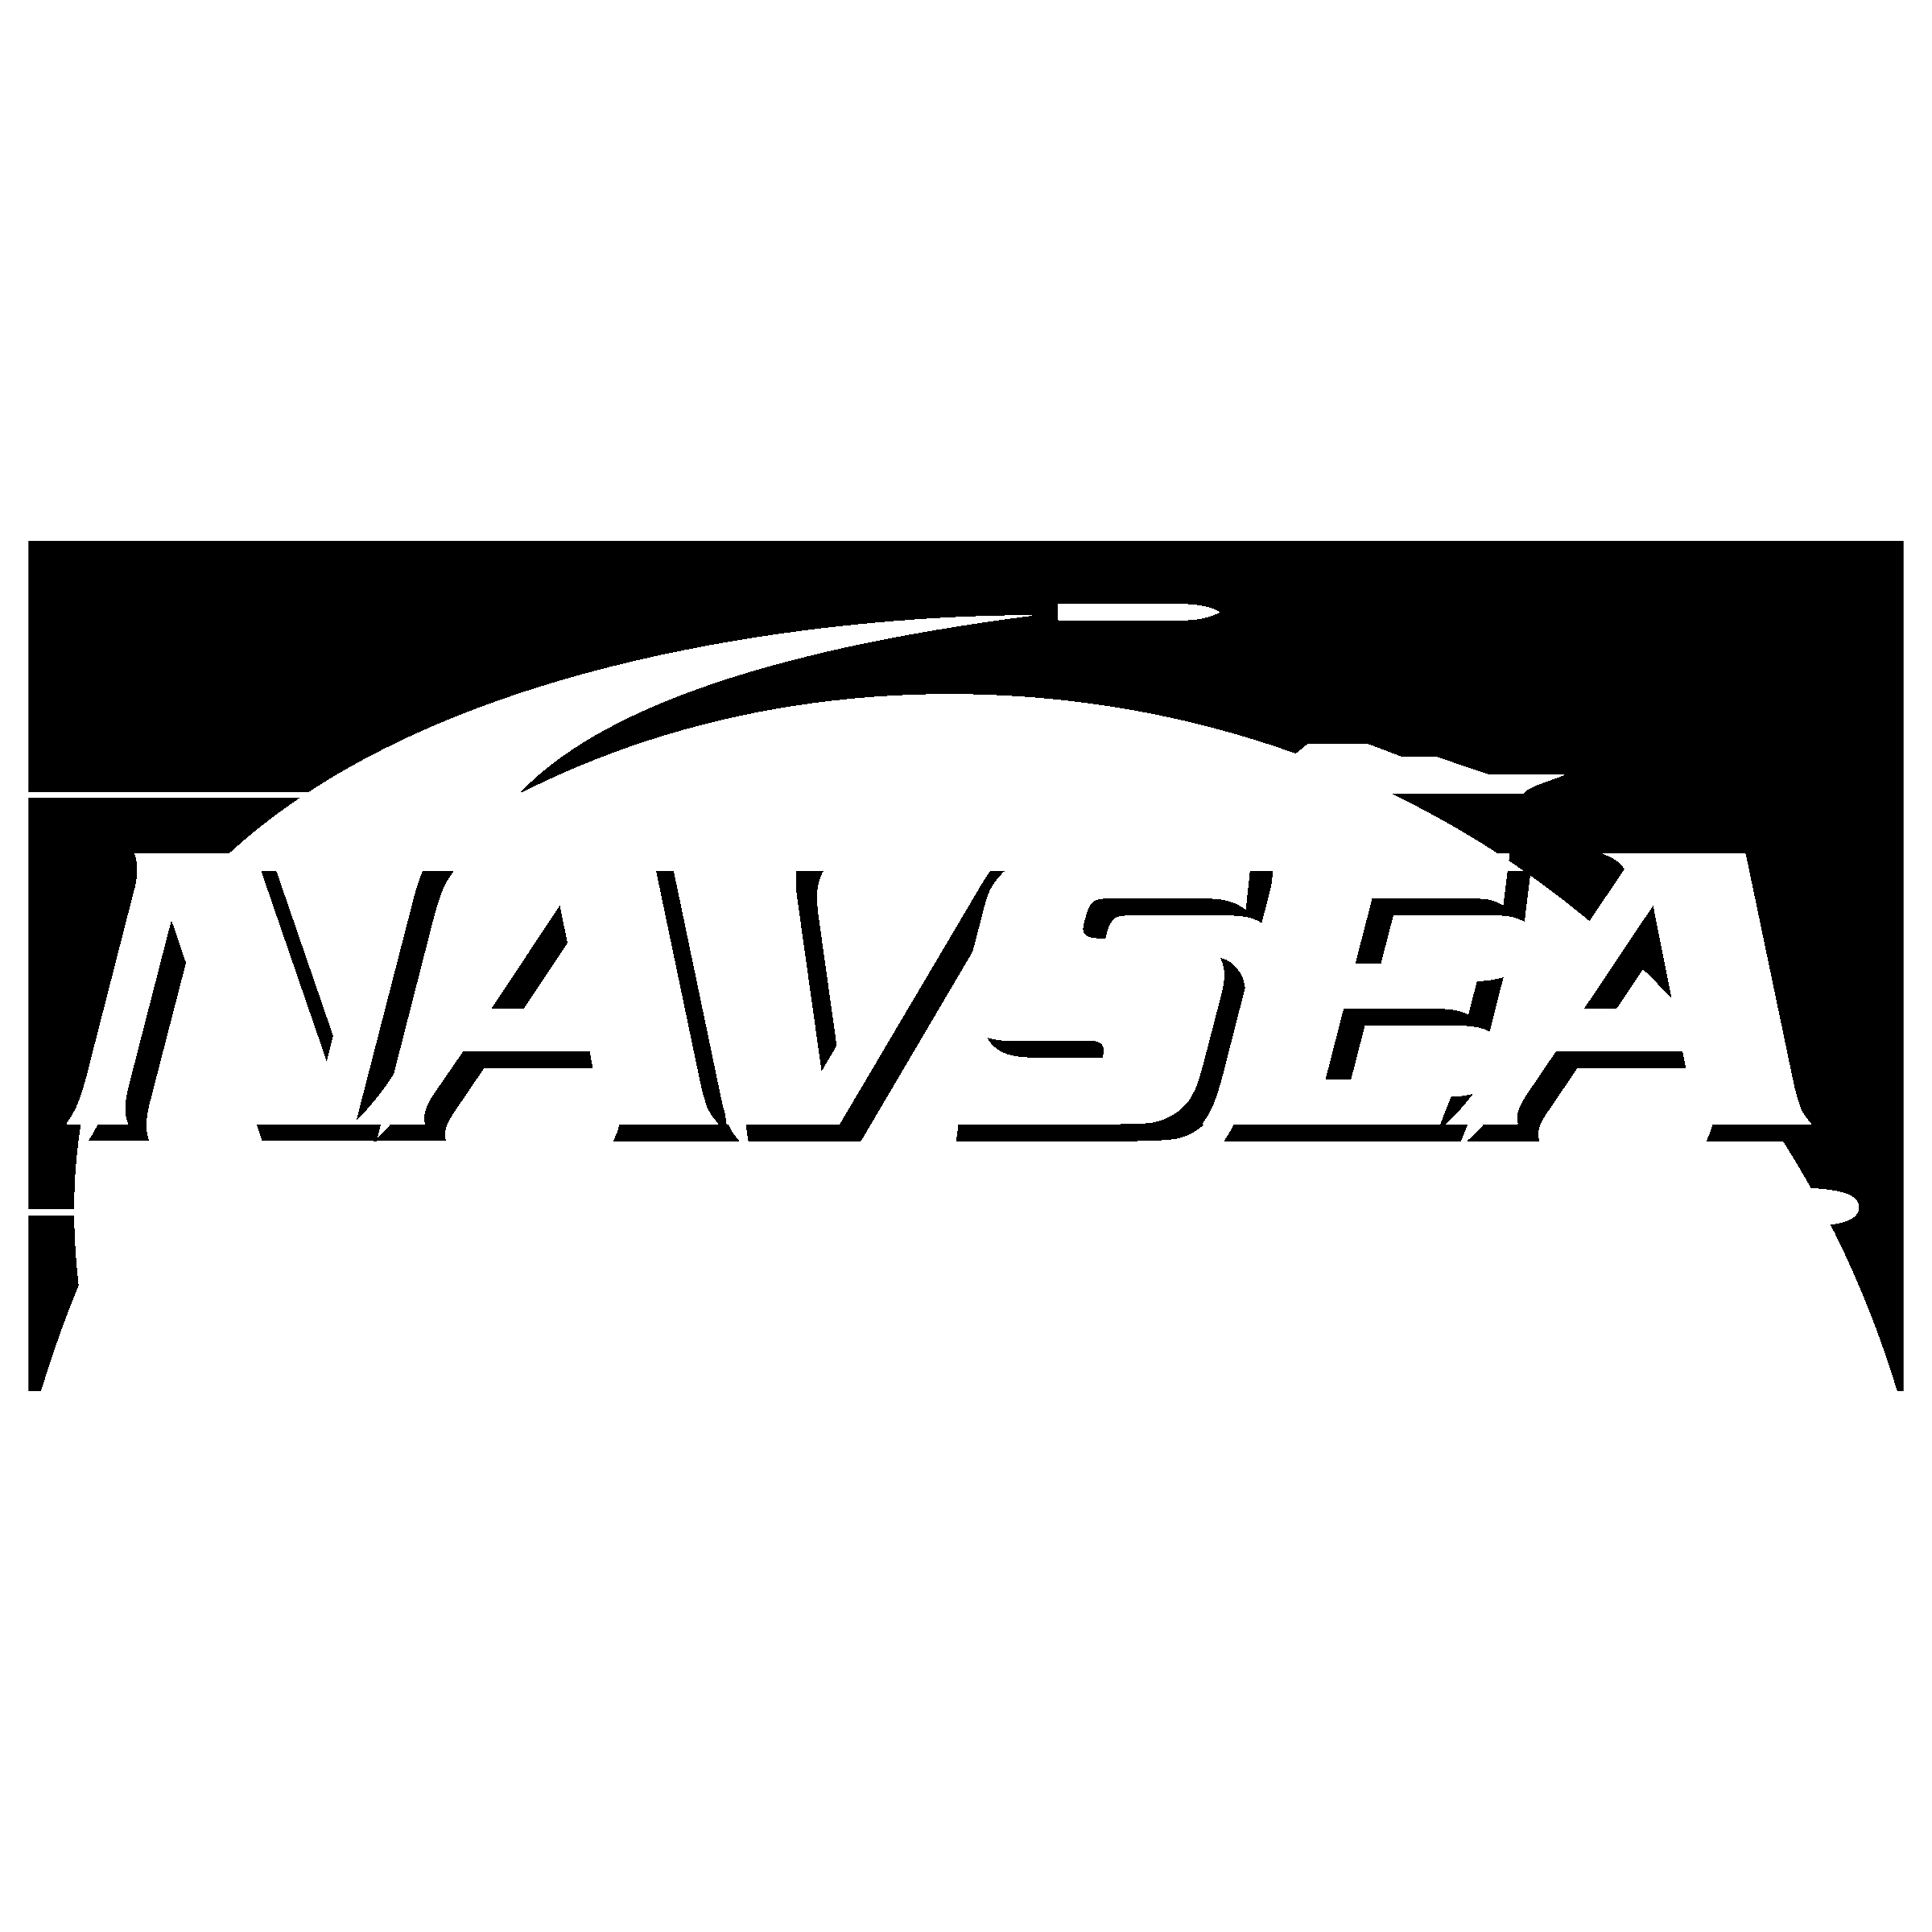 NAVSEA Logo - Navsea Logo PNG Transparent & SVG Vector